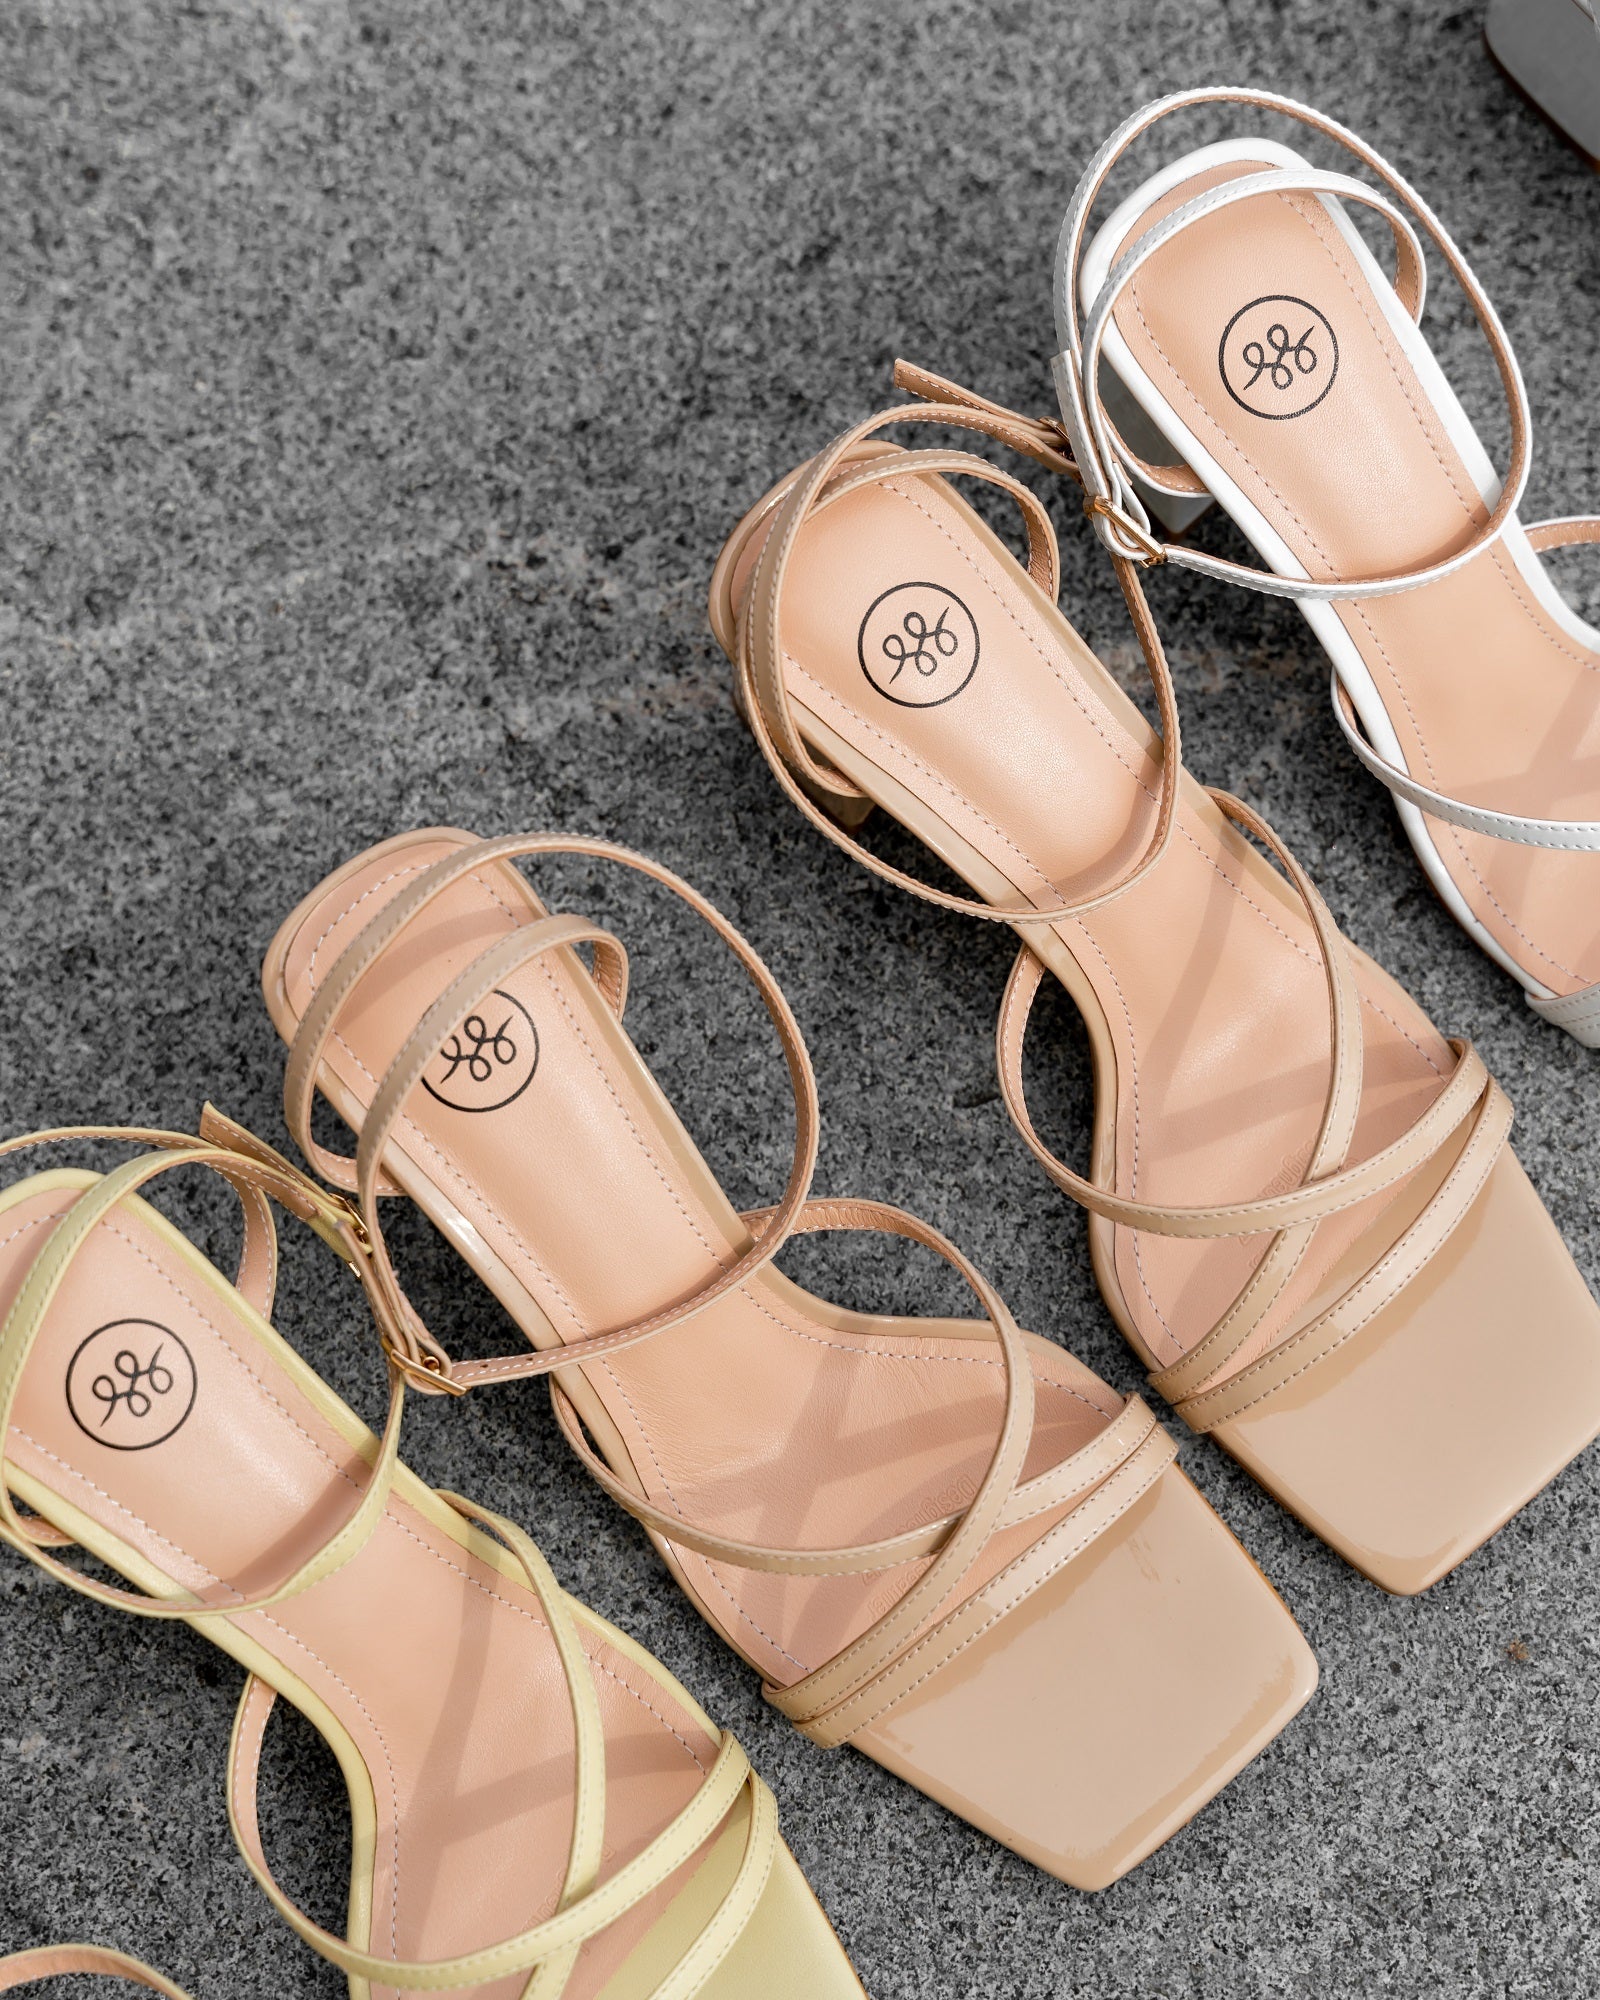 Ky Sandal Heel Nude Heels by Sole Shoes NZ H22-36